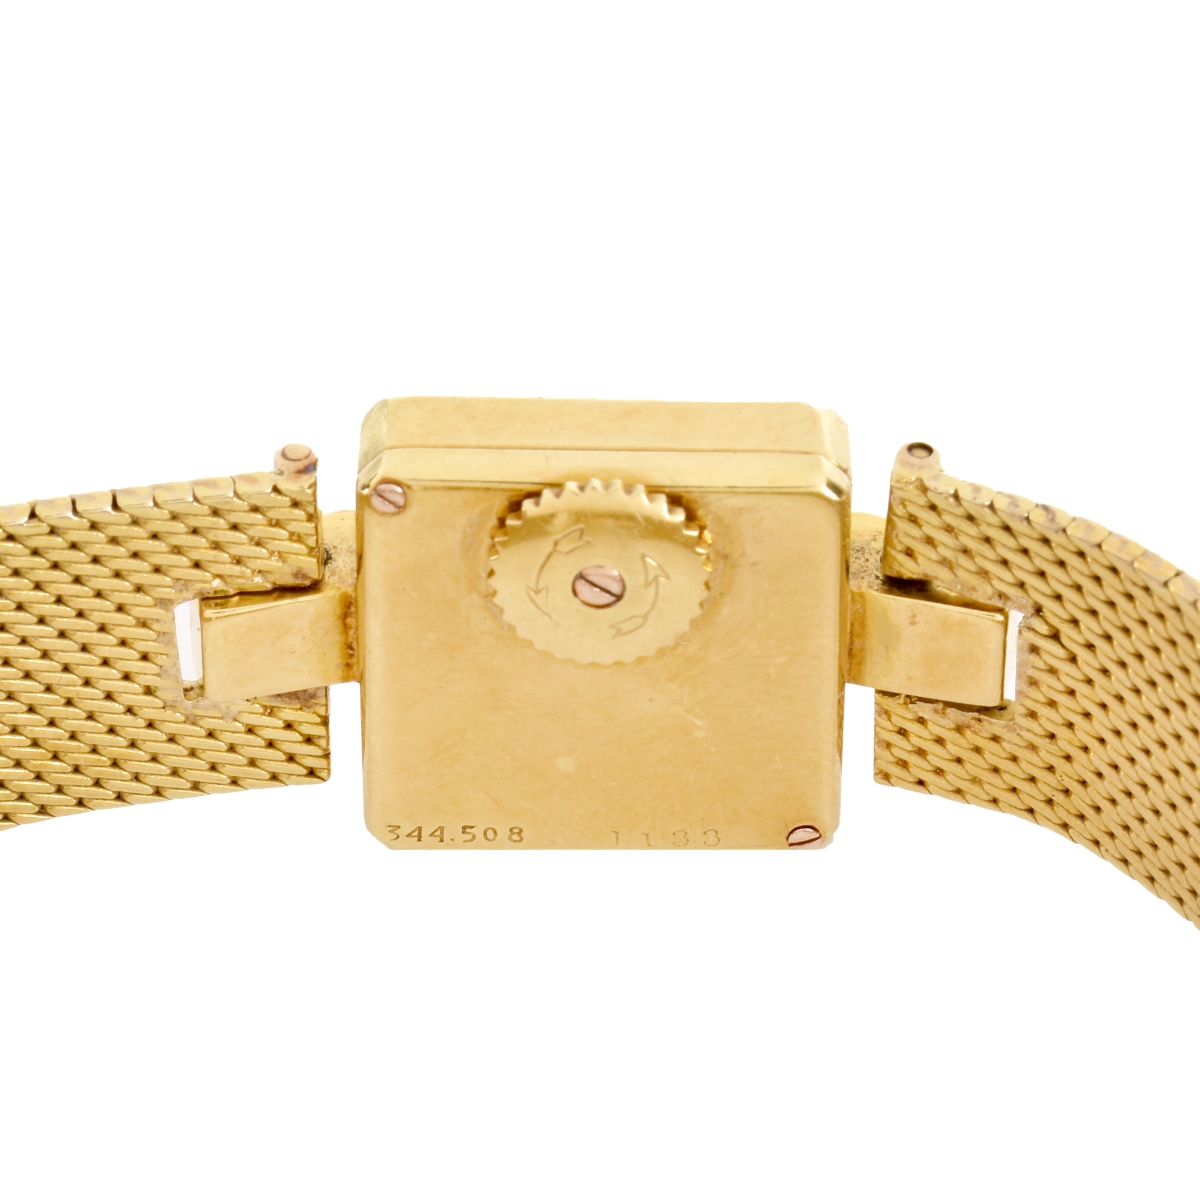 Vintage Cartier 18K Gold Watch